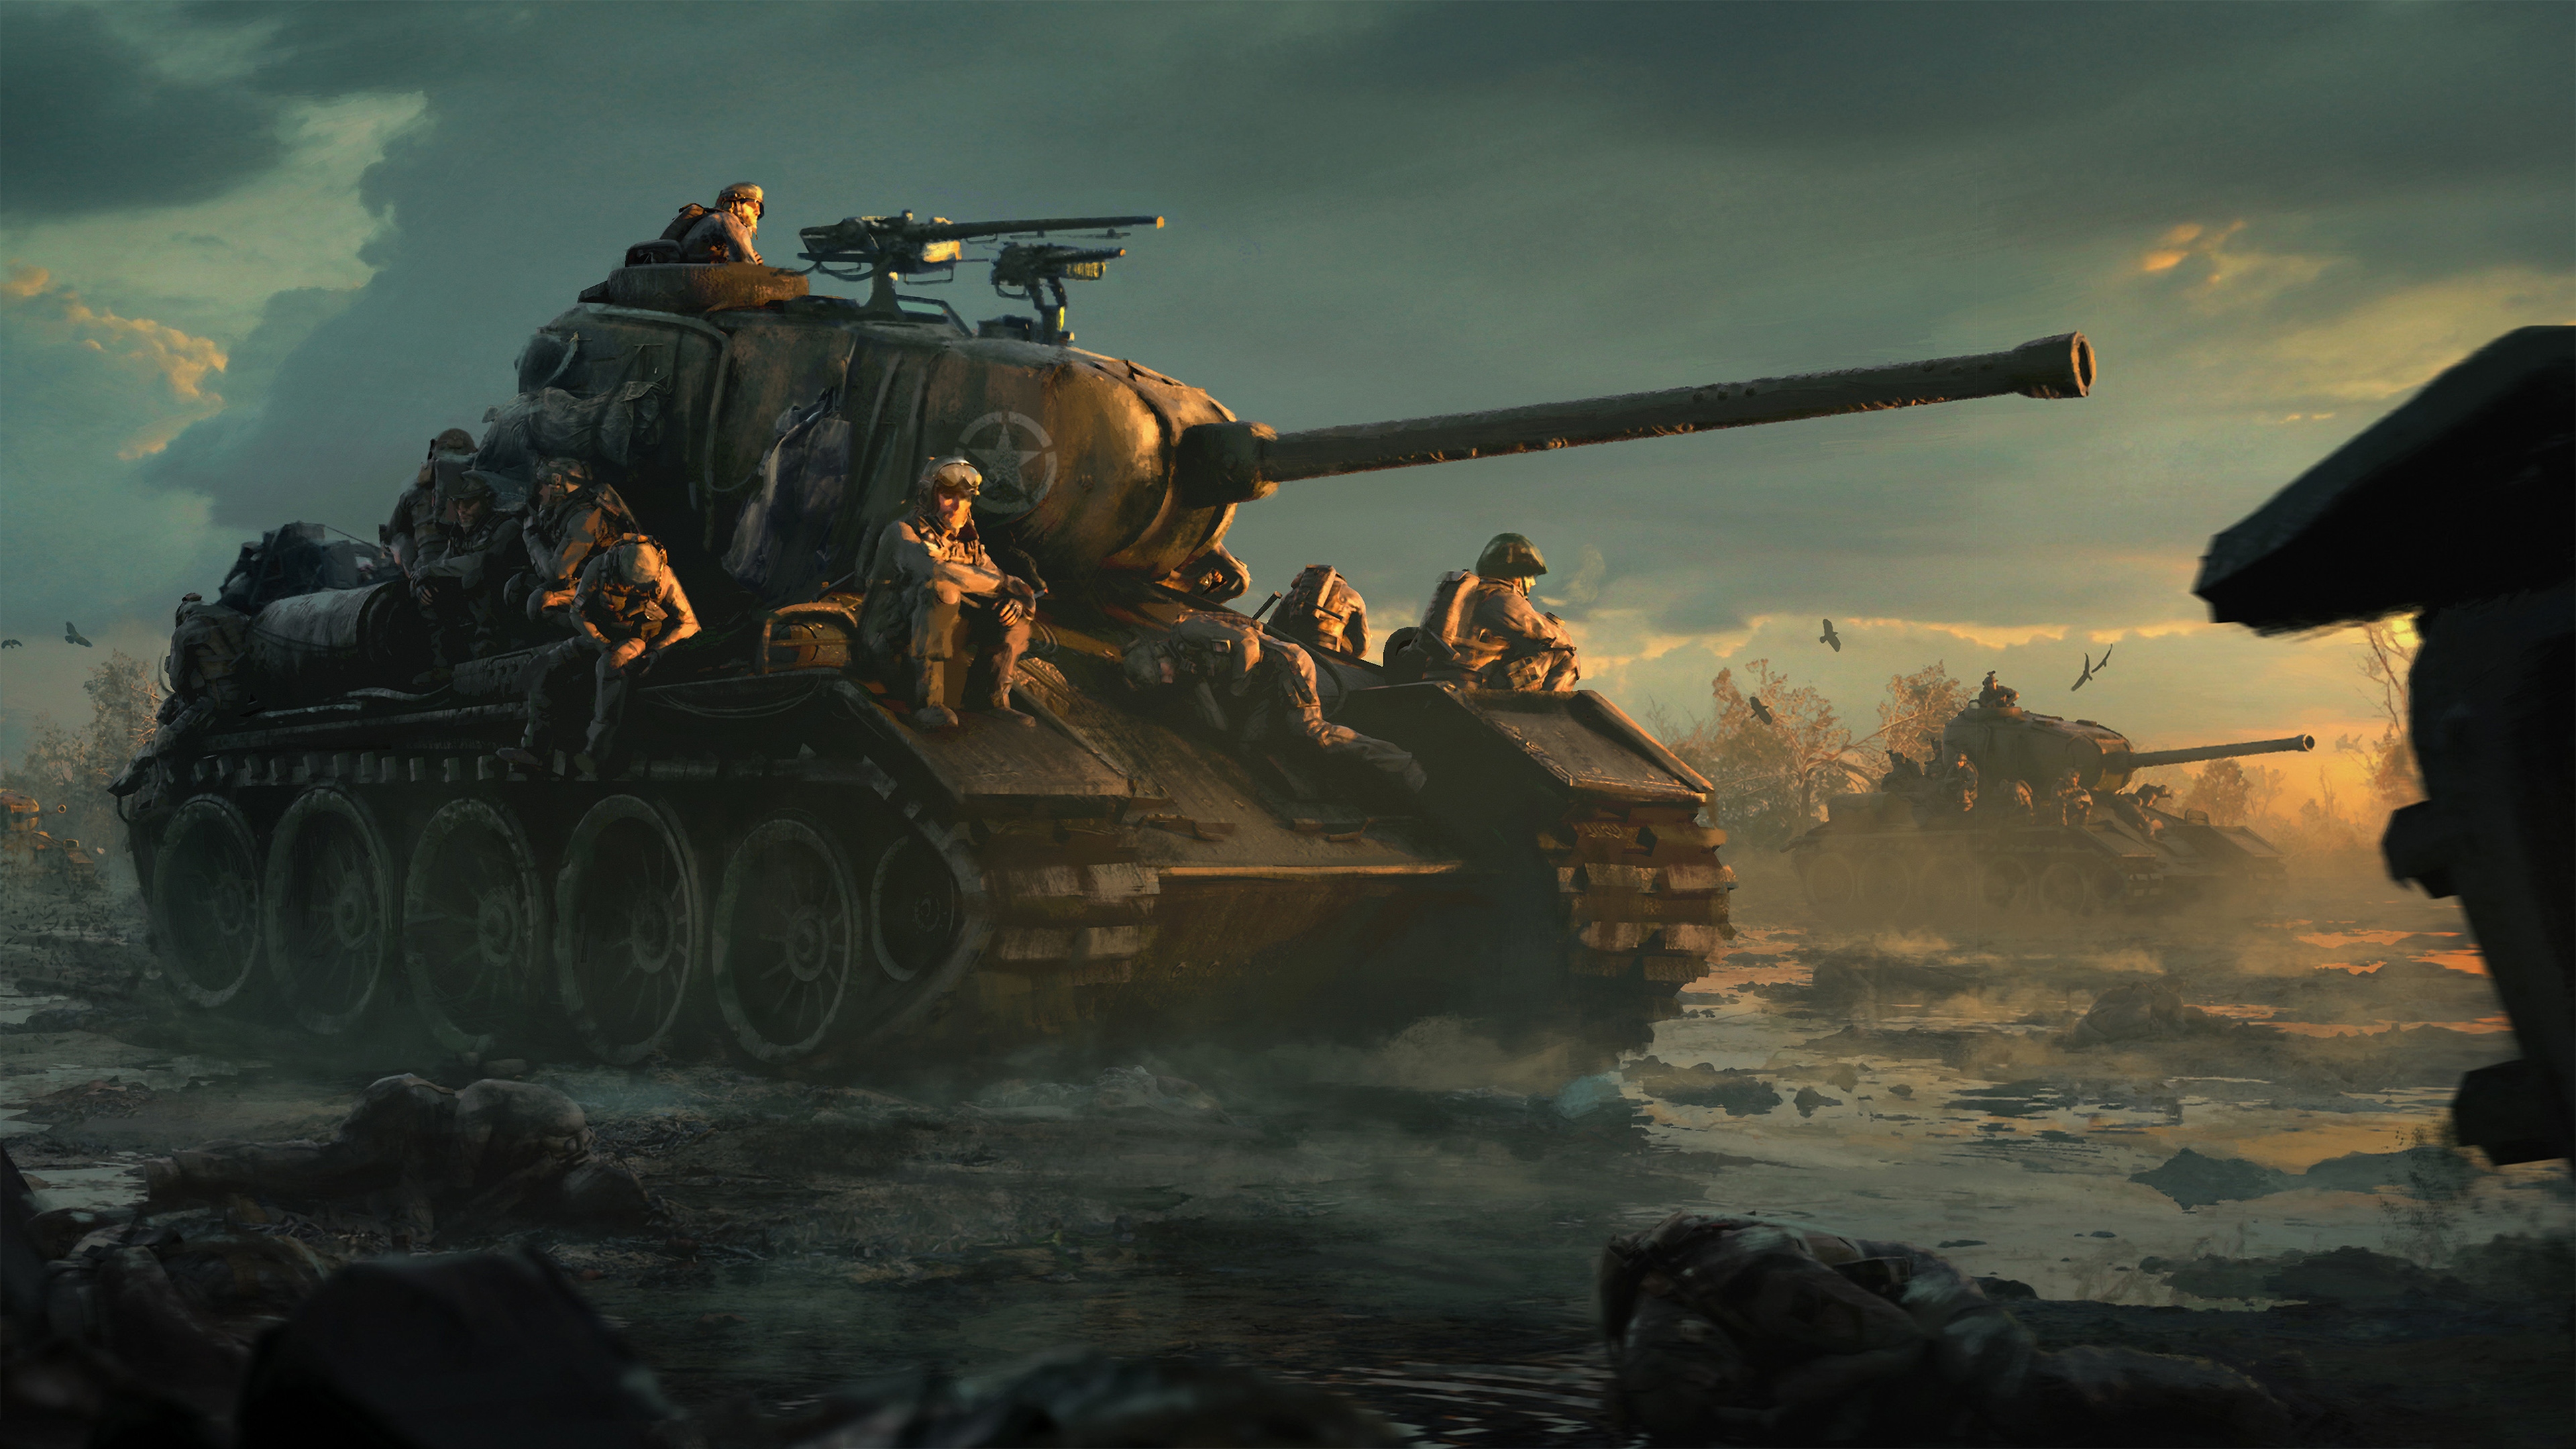 Wojtek Fus Tank Soldier War Digital Art Sunset 3840x2160